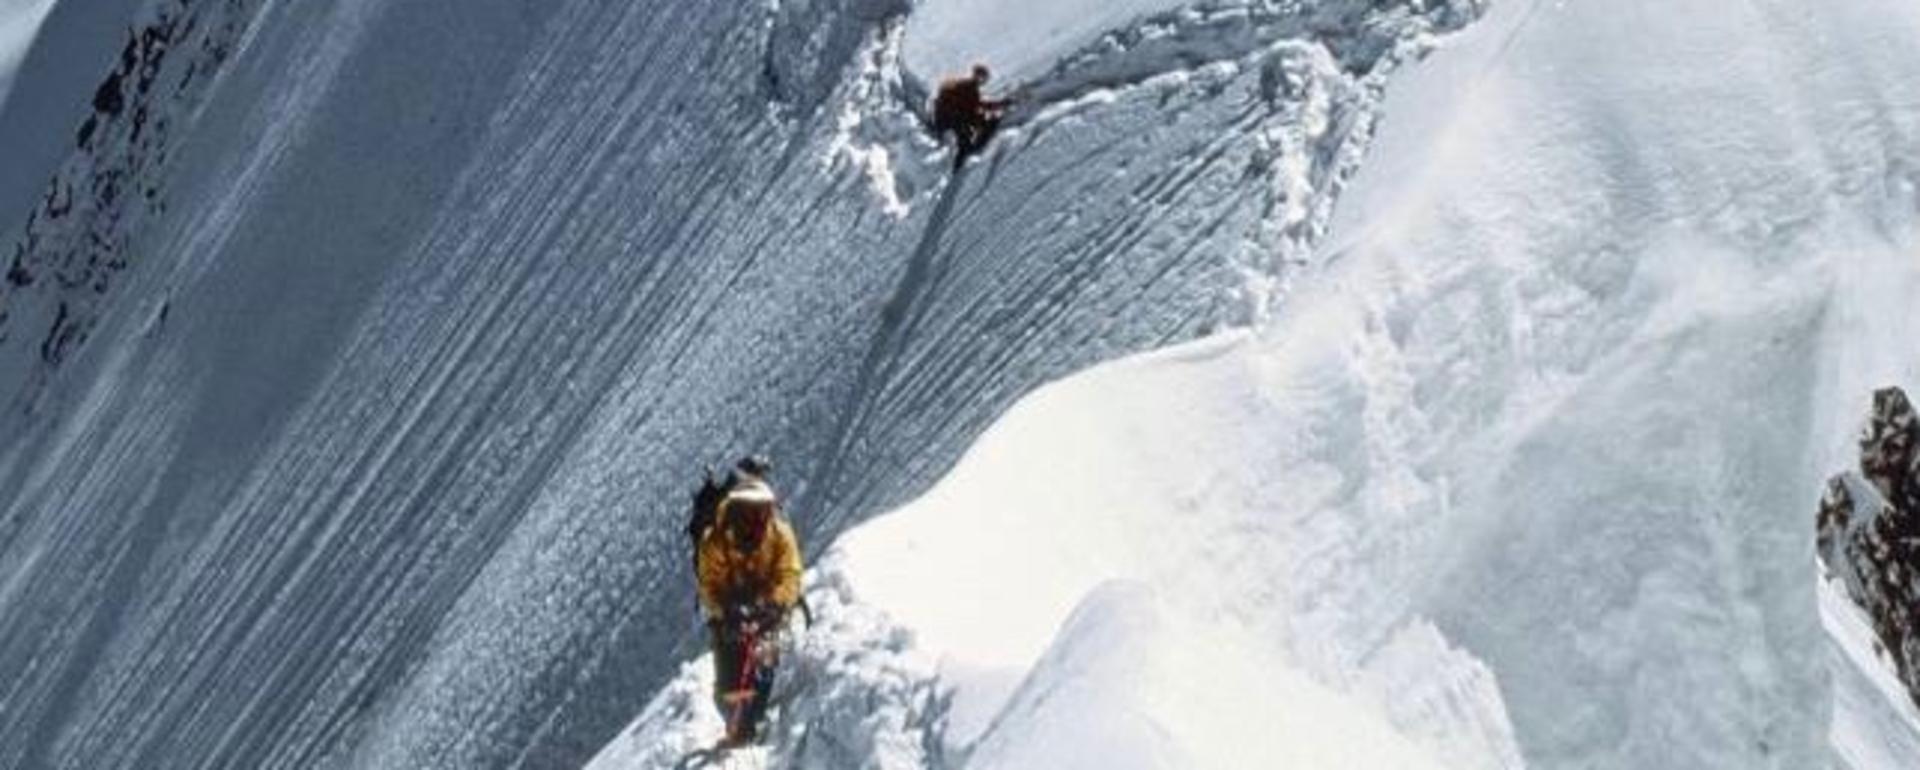 Ridgeway on the treacherous knife-edge of K2